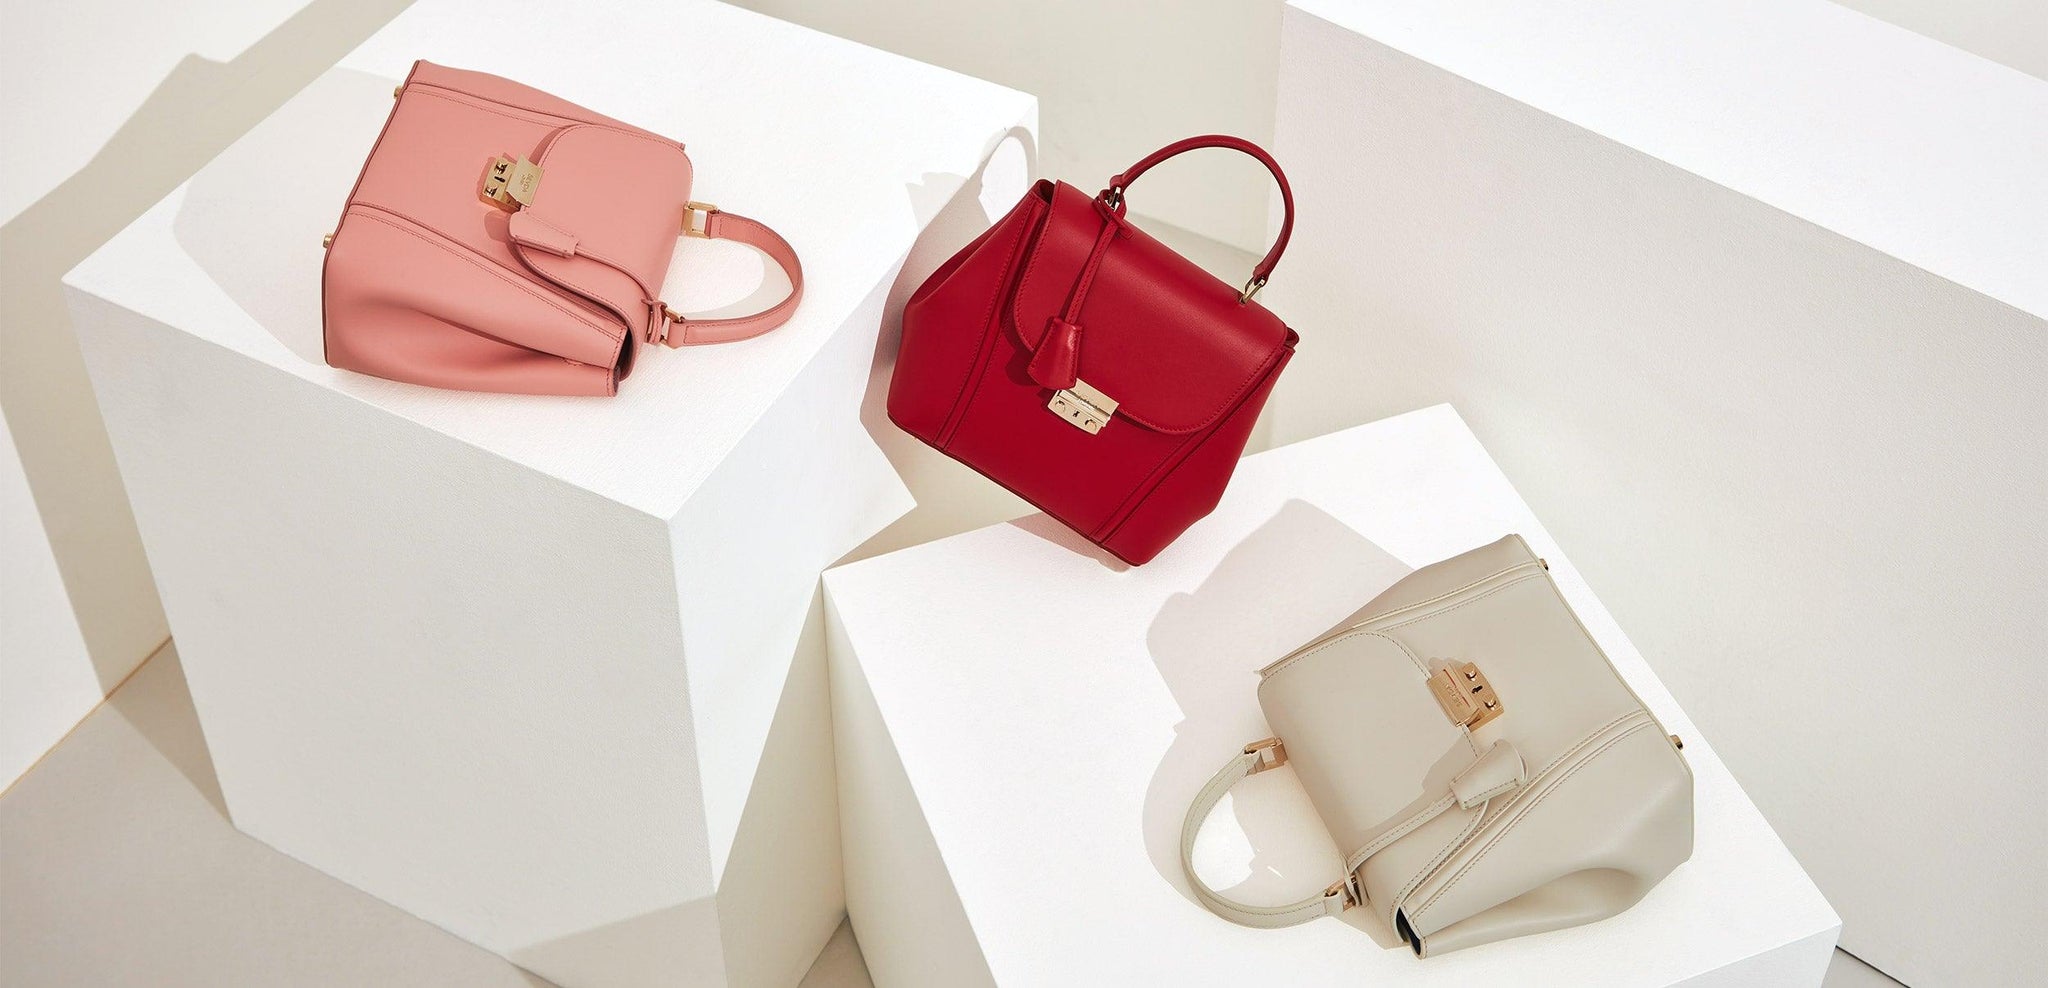 Explore Our Newest Designer Handbag Collection